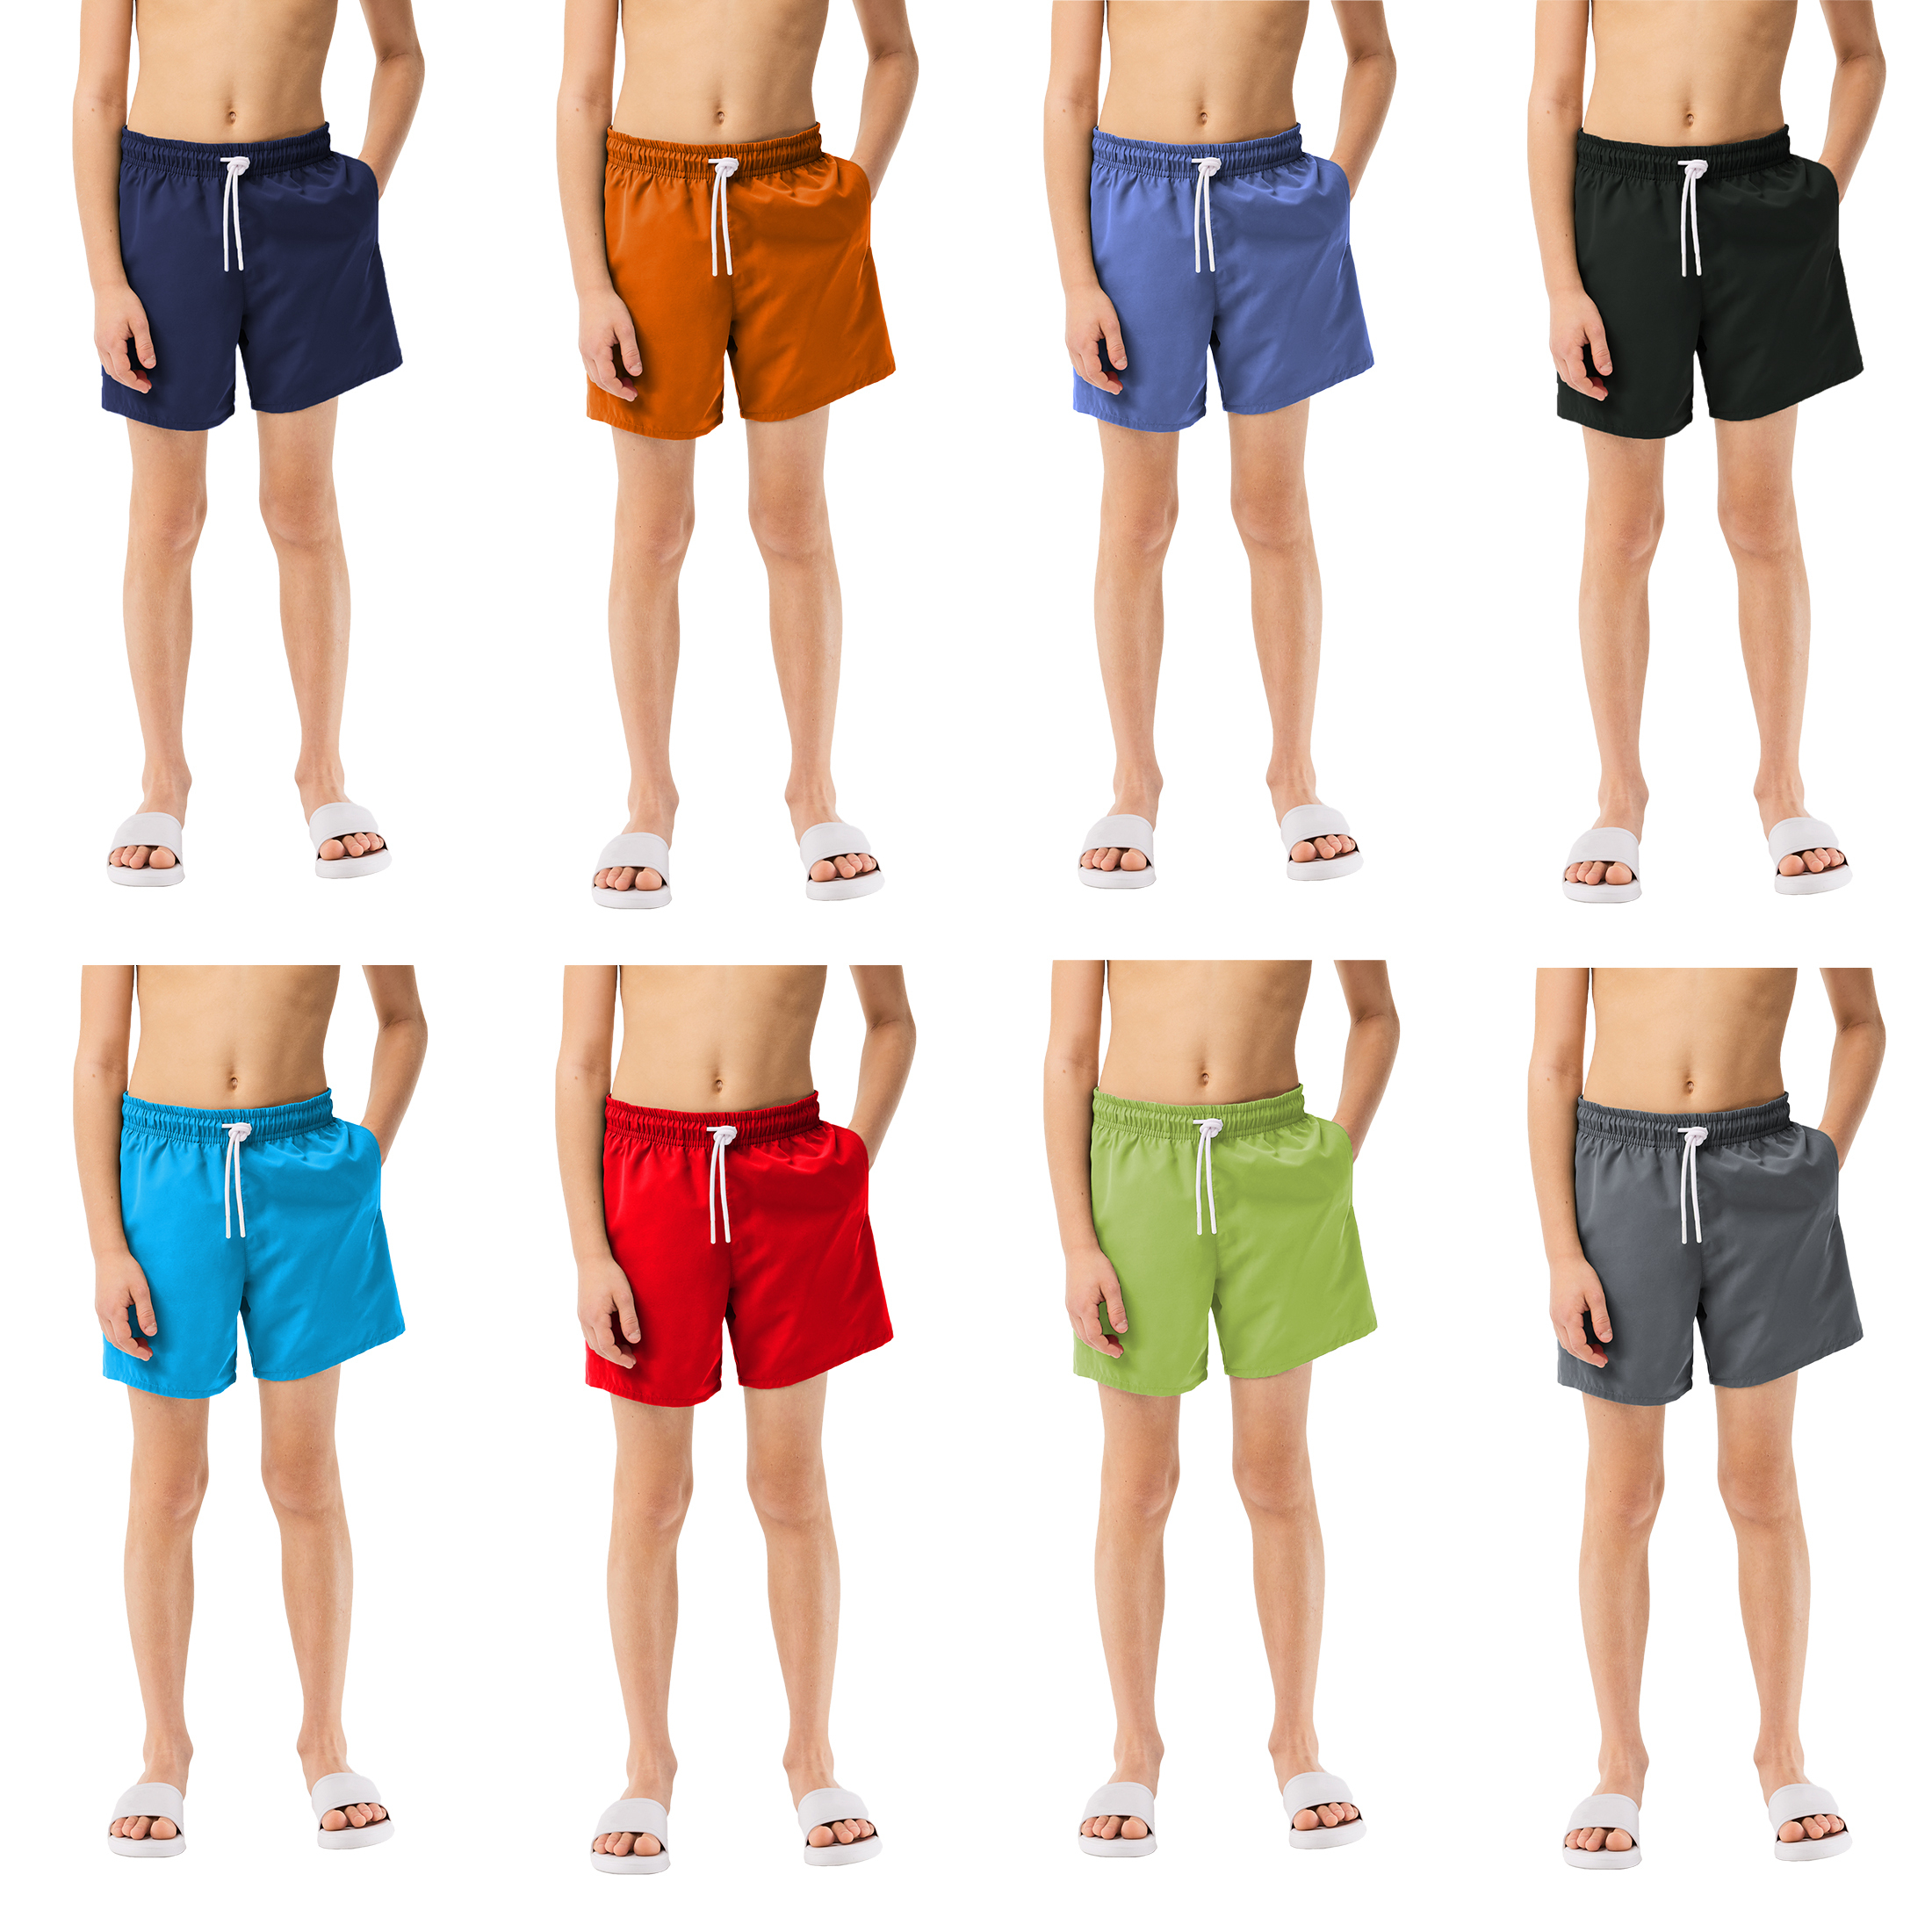 3-Pack Boy's Beach Swim Trunk Shorts Quick Dry UPF 50+ Little Boys Bathing Summer Swimsuit - M